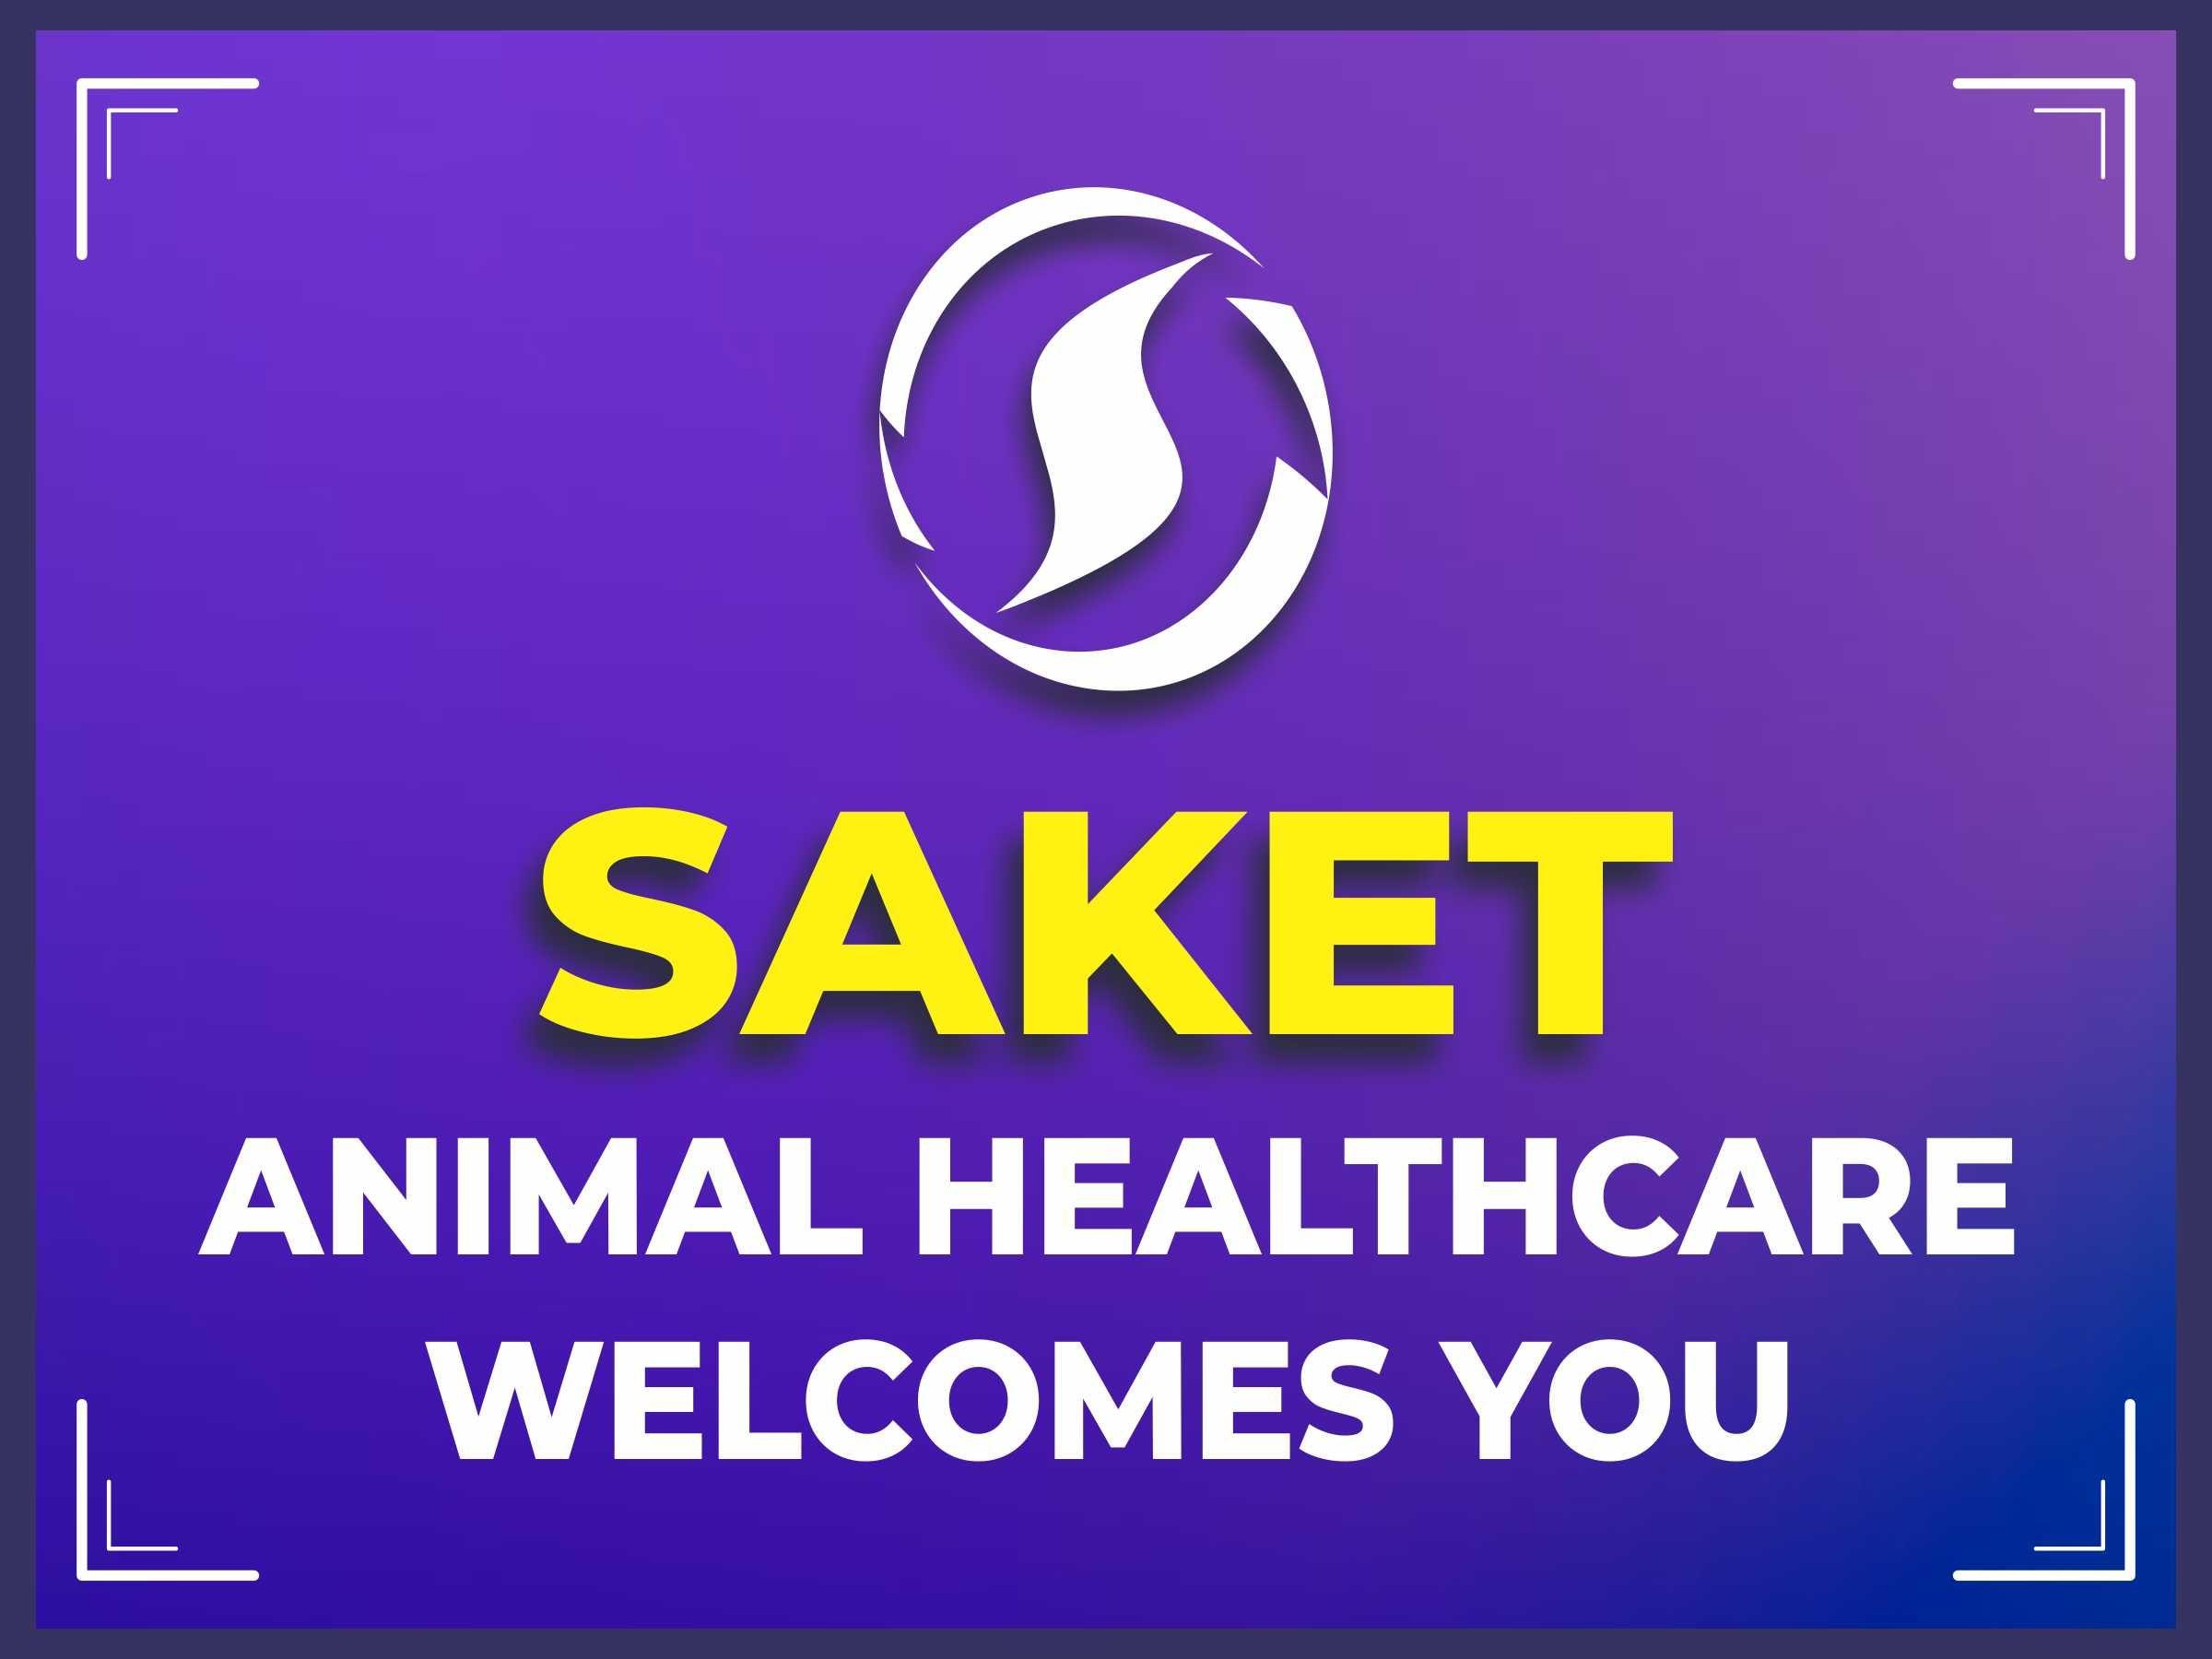 SAKET ANIMAL HEALTHCARE